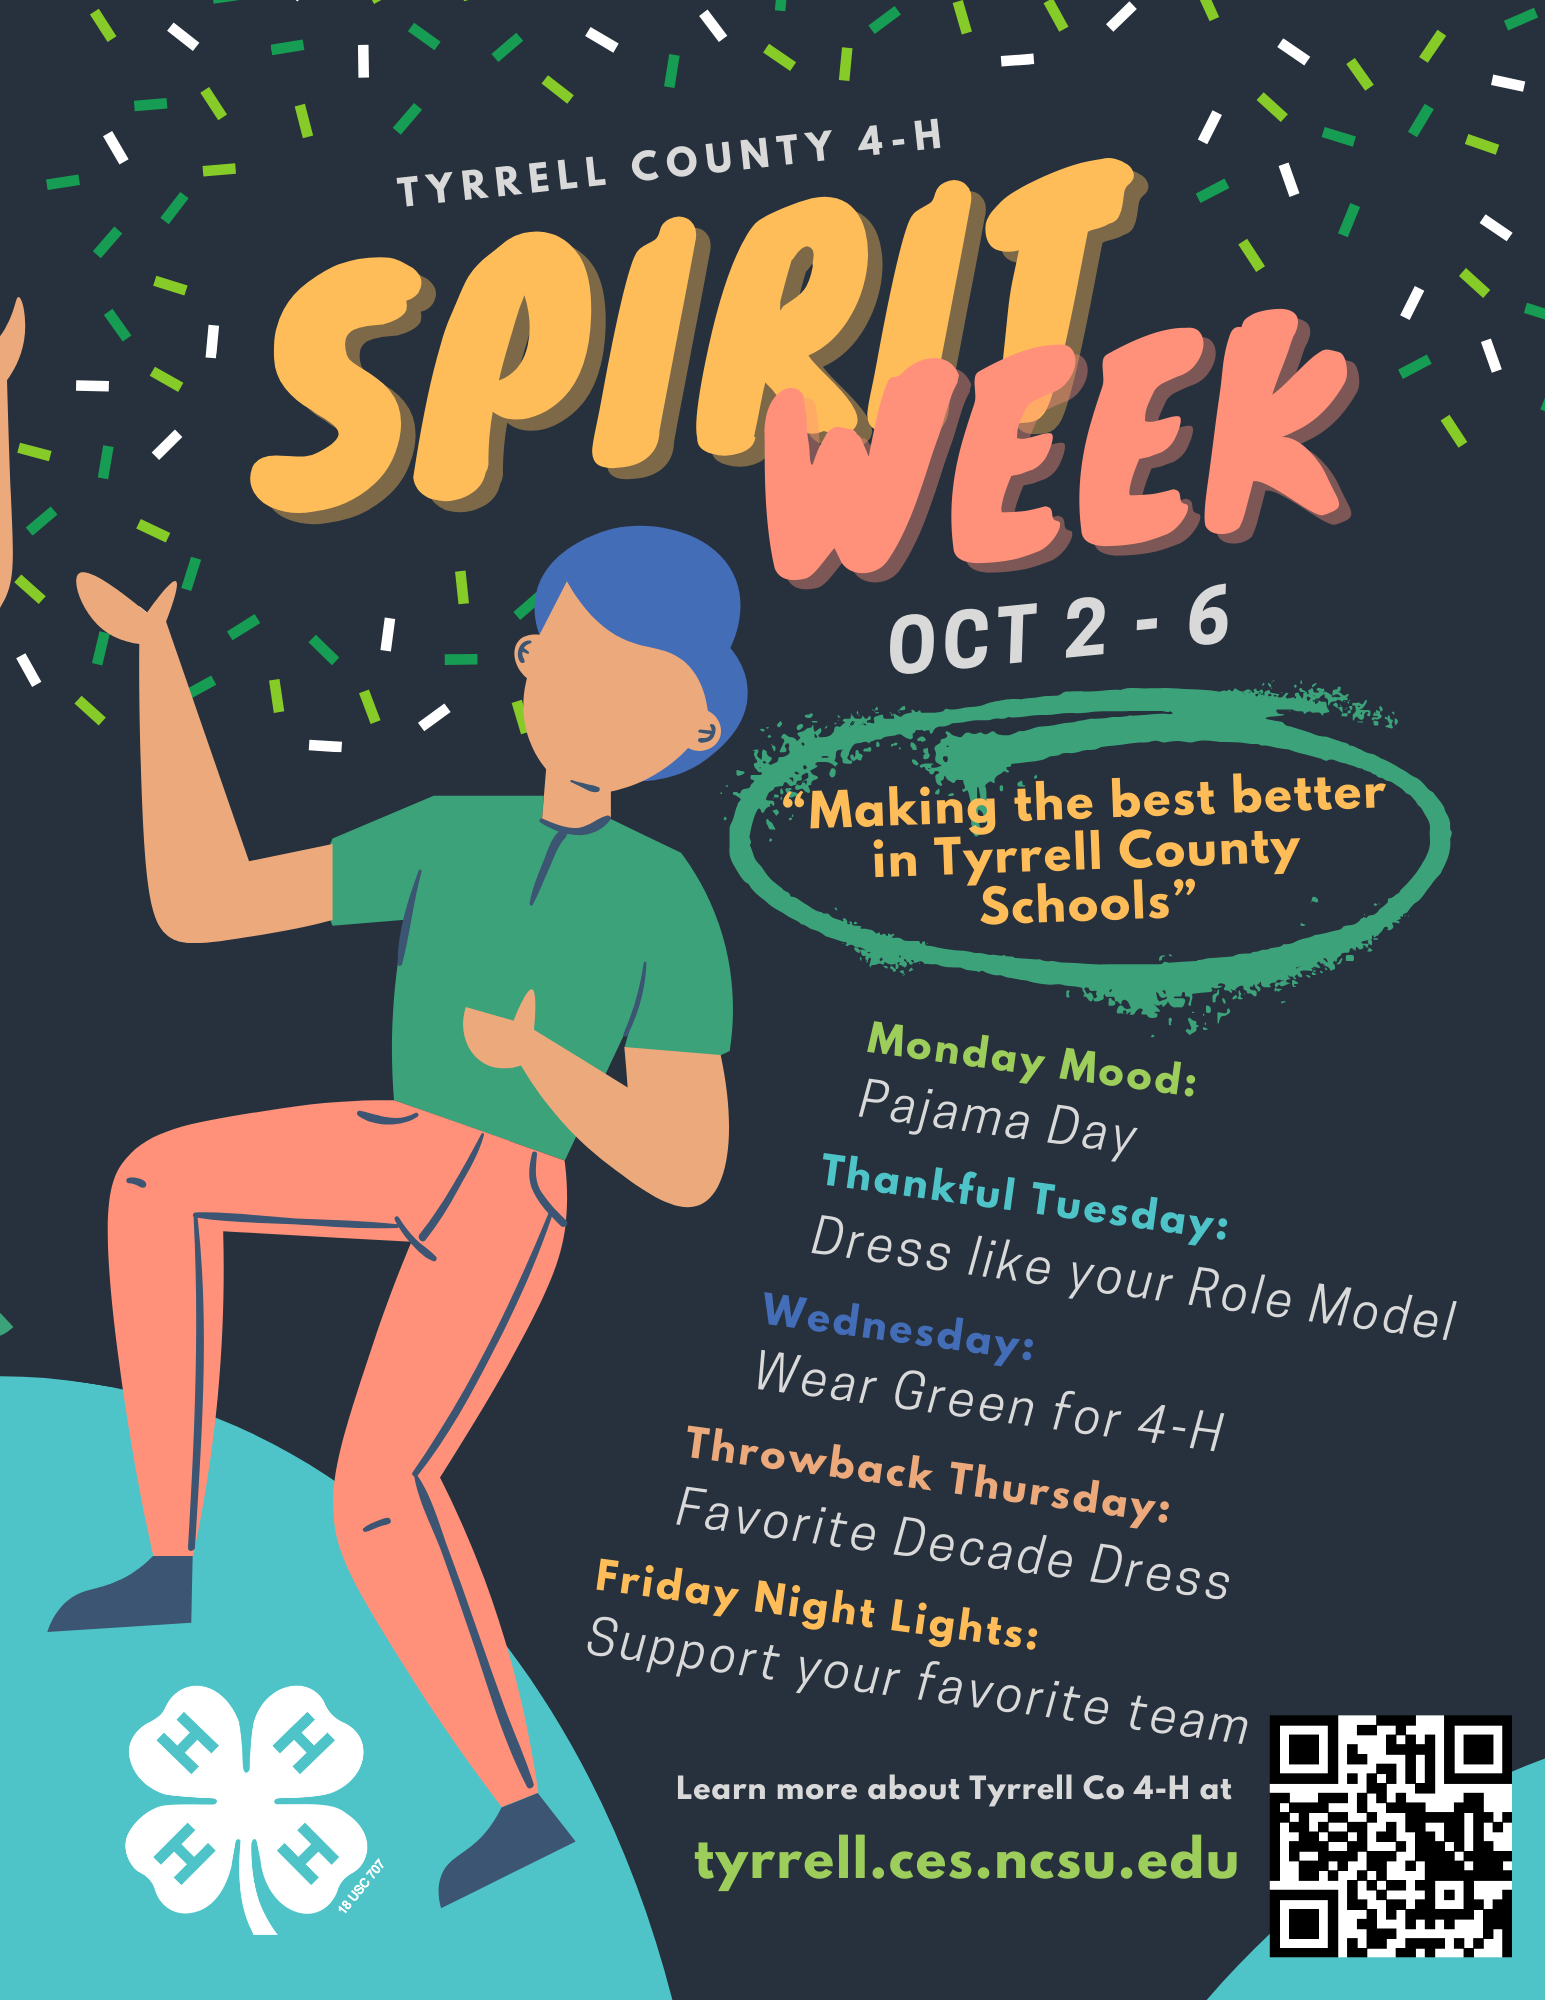 Tyrrell County 4-H Spirit Week October 2 - 6